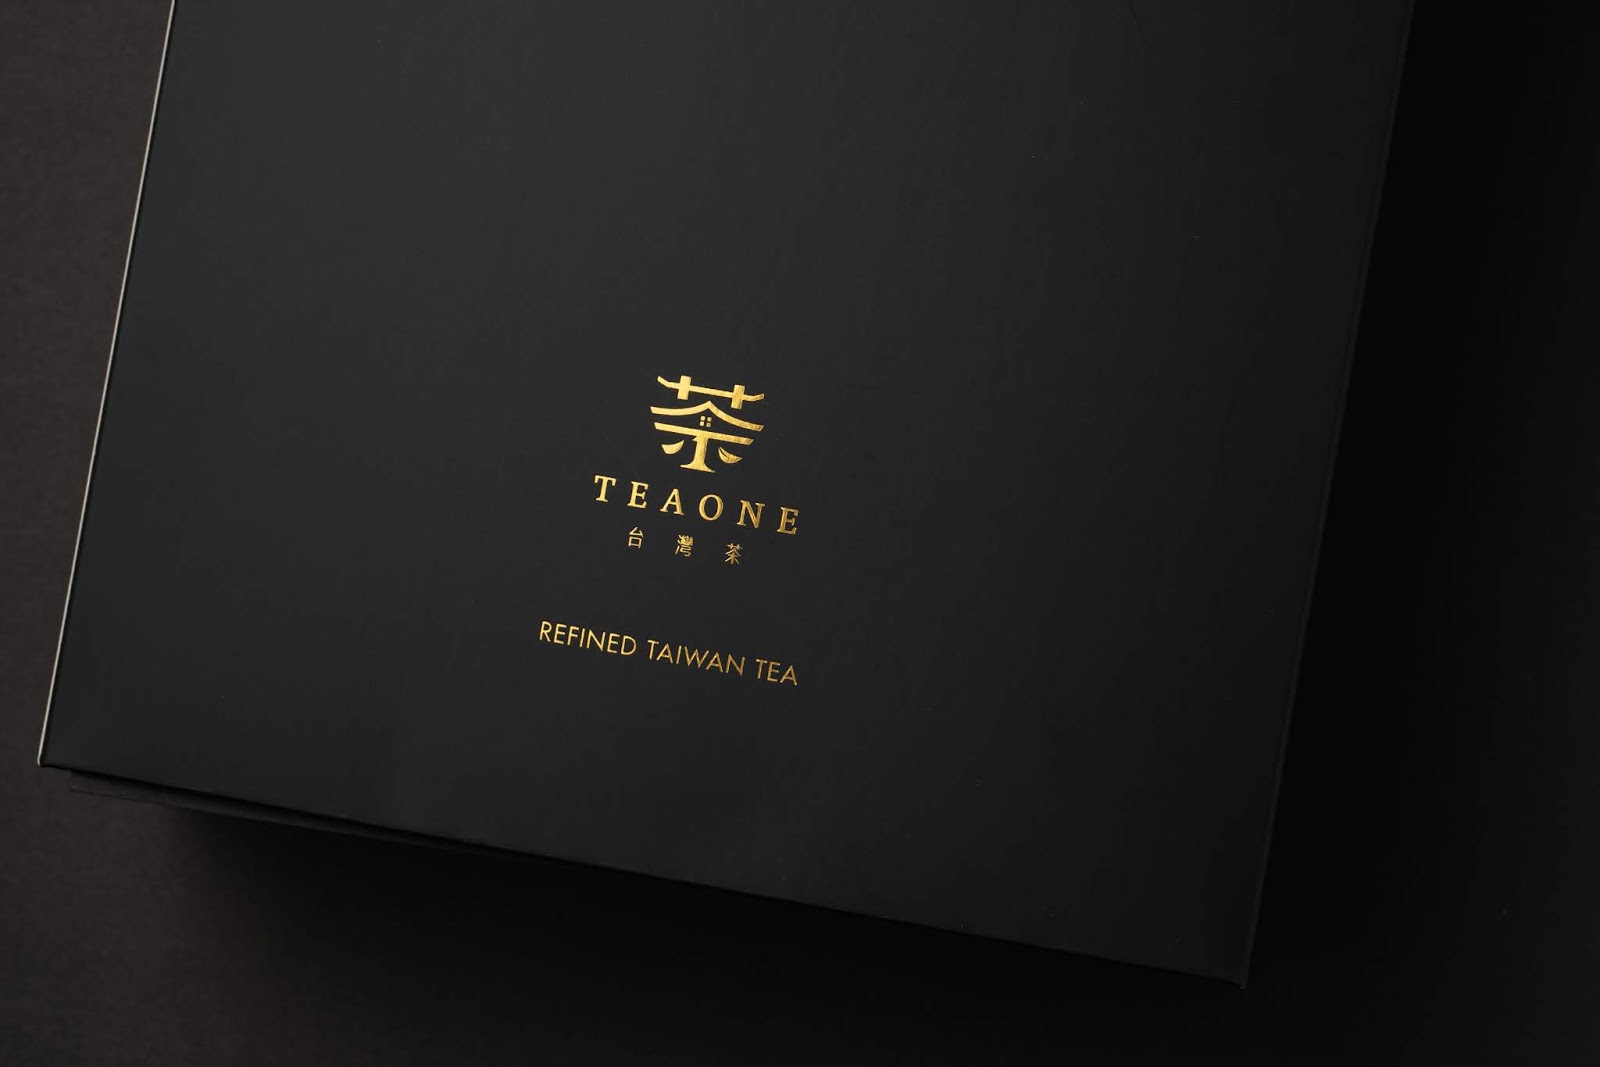 TEAONE台湾茶包装设计